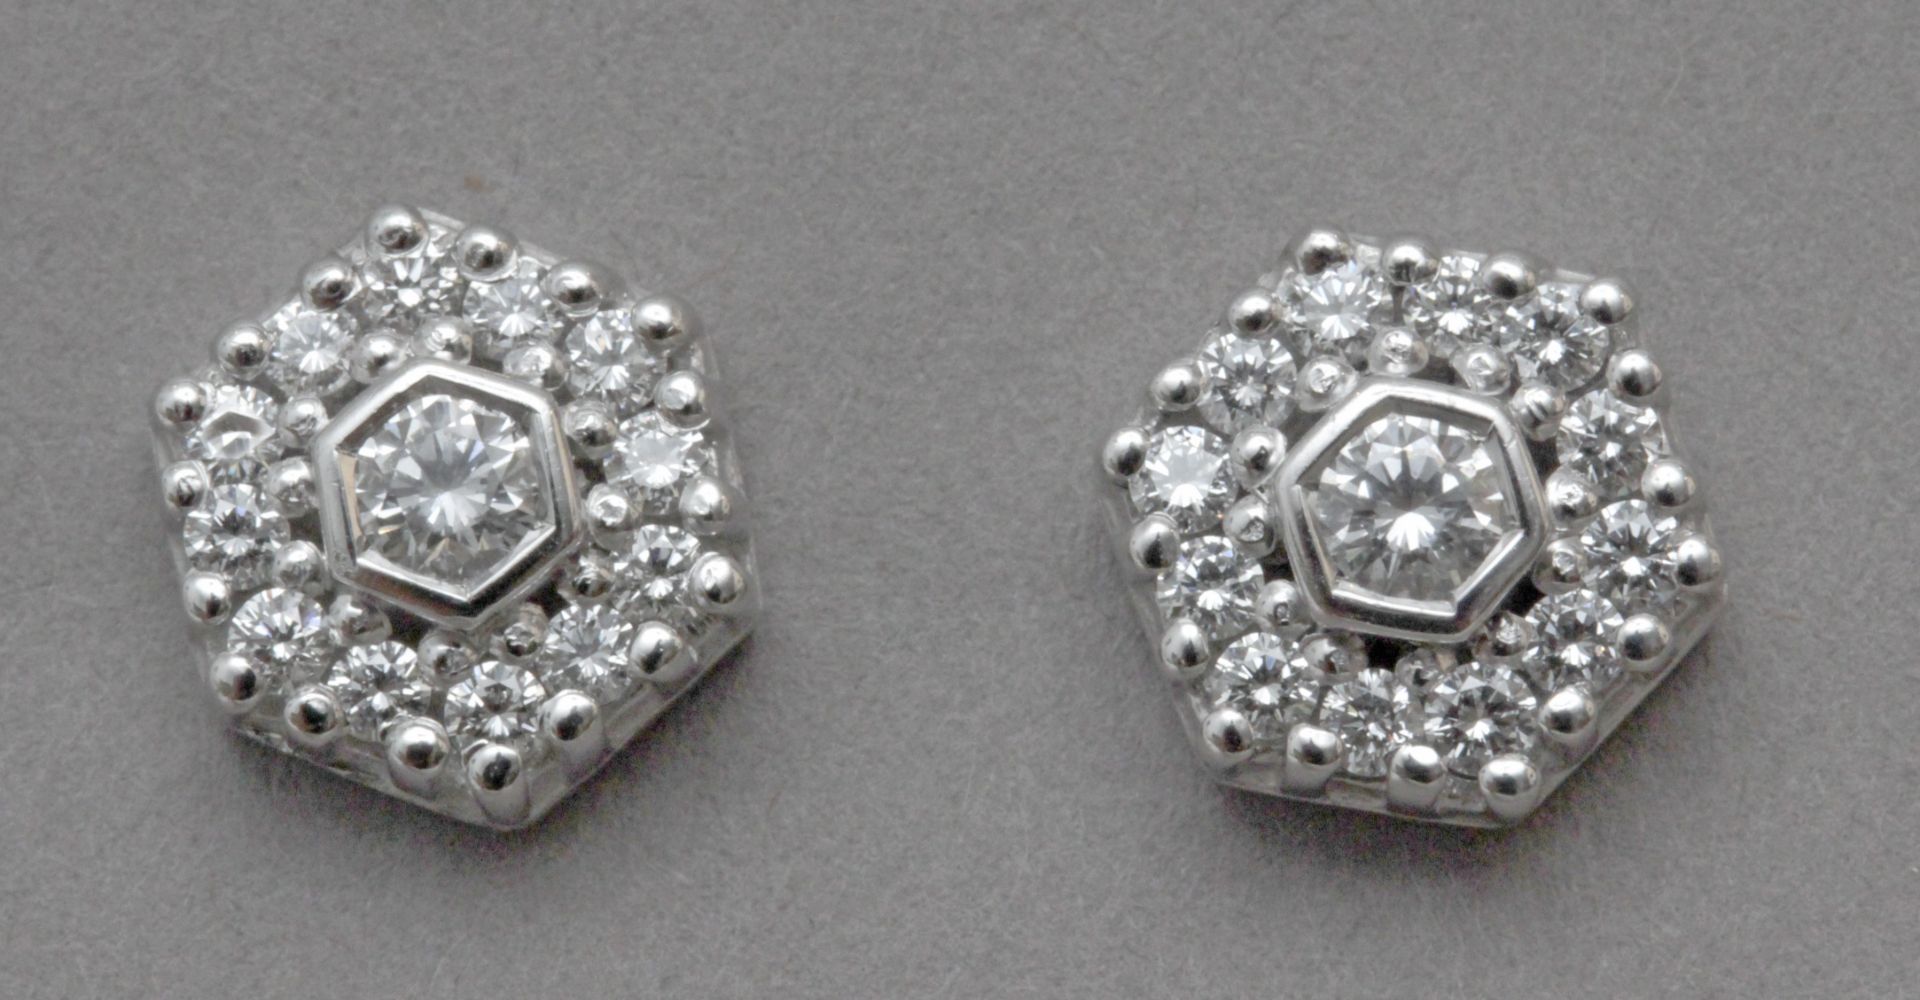 A brilliant cut diamond cluster earrings